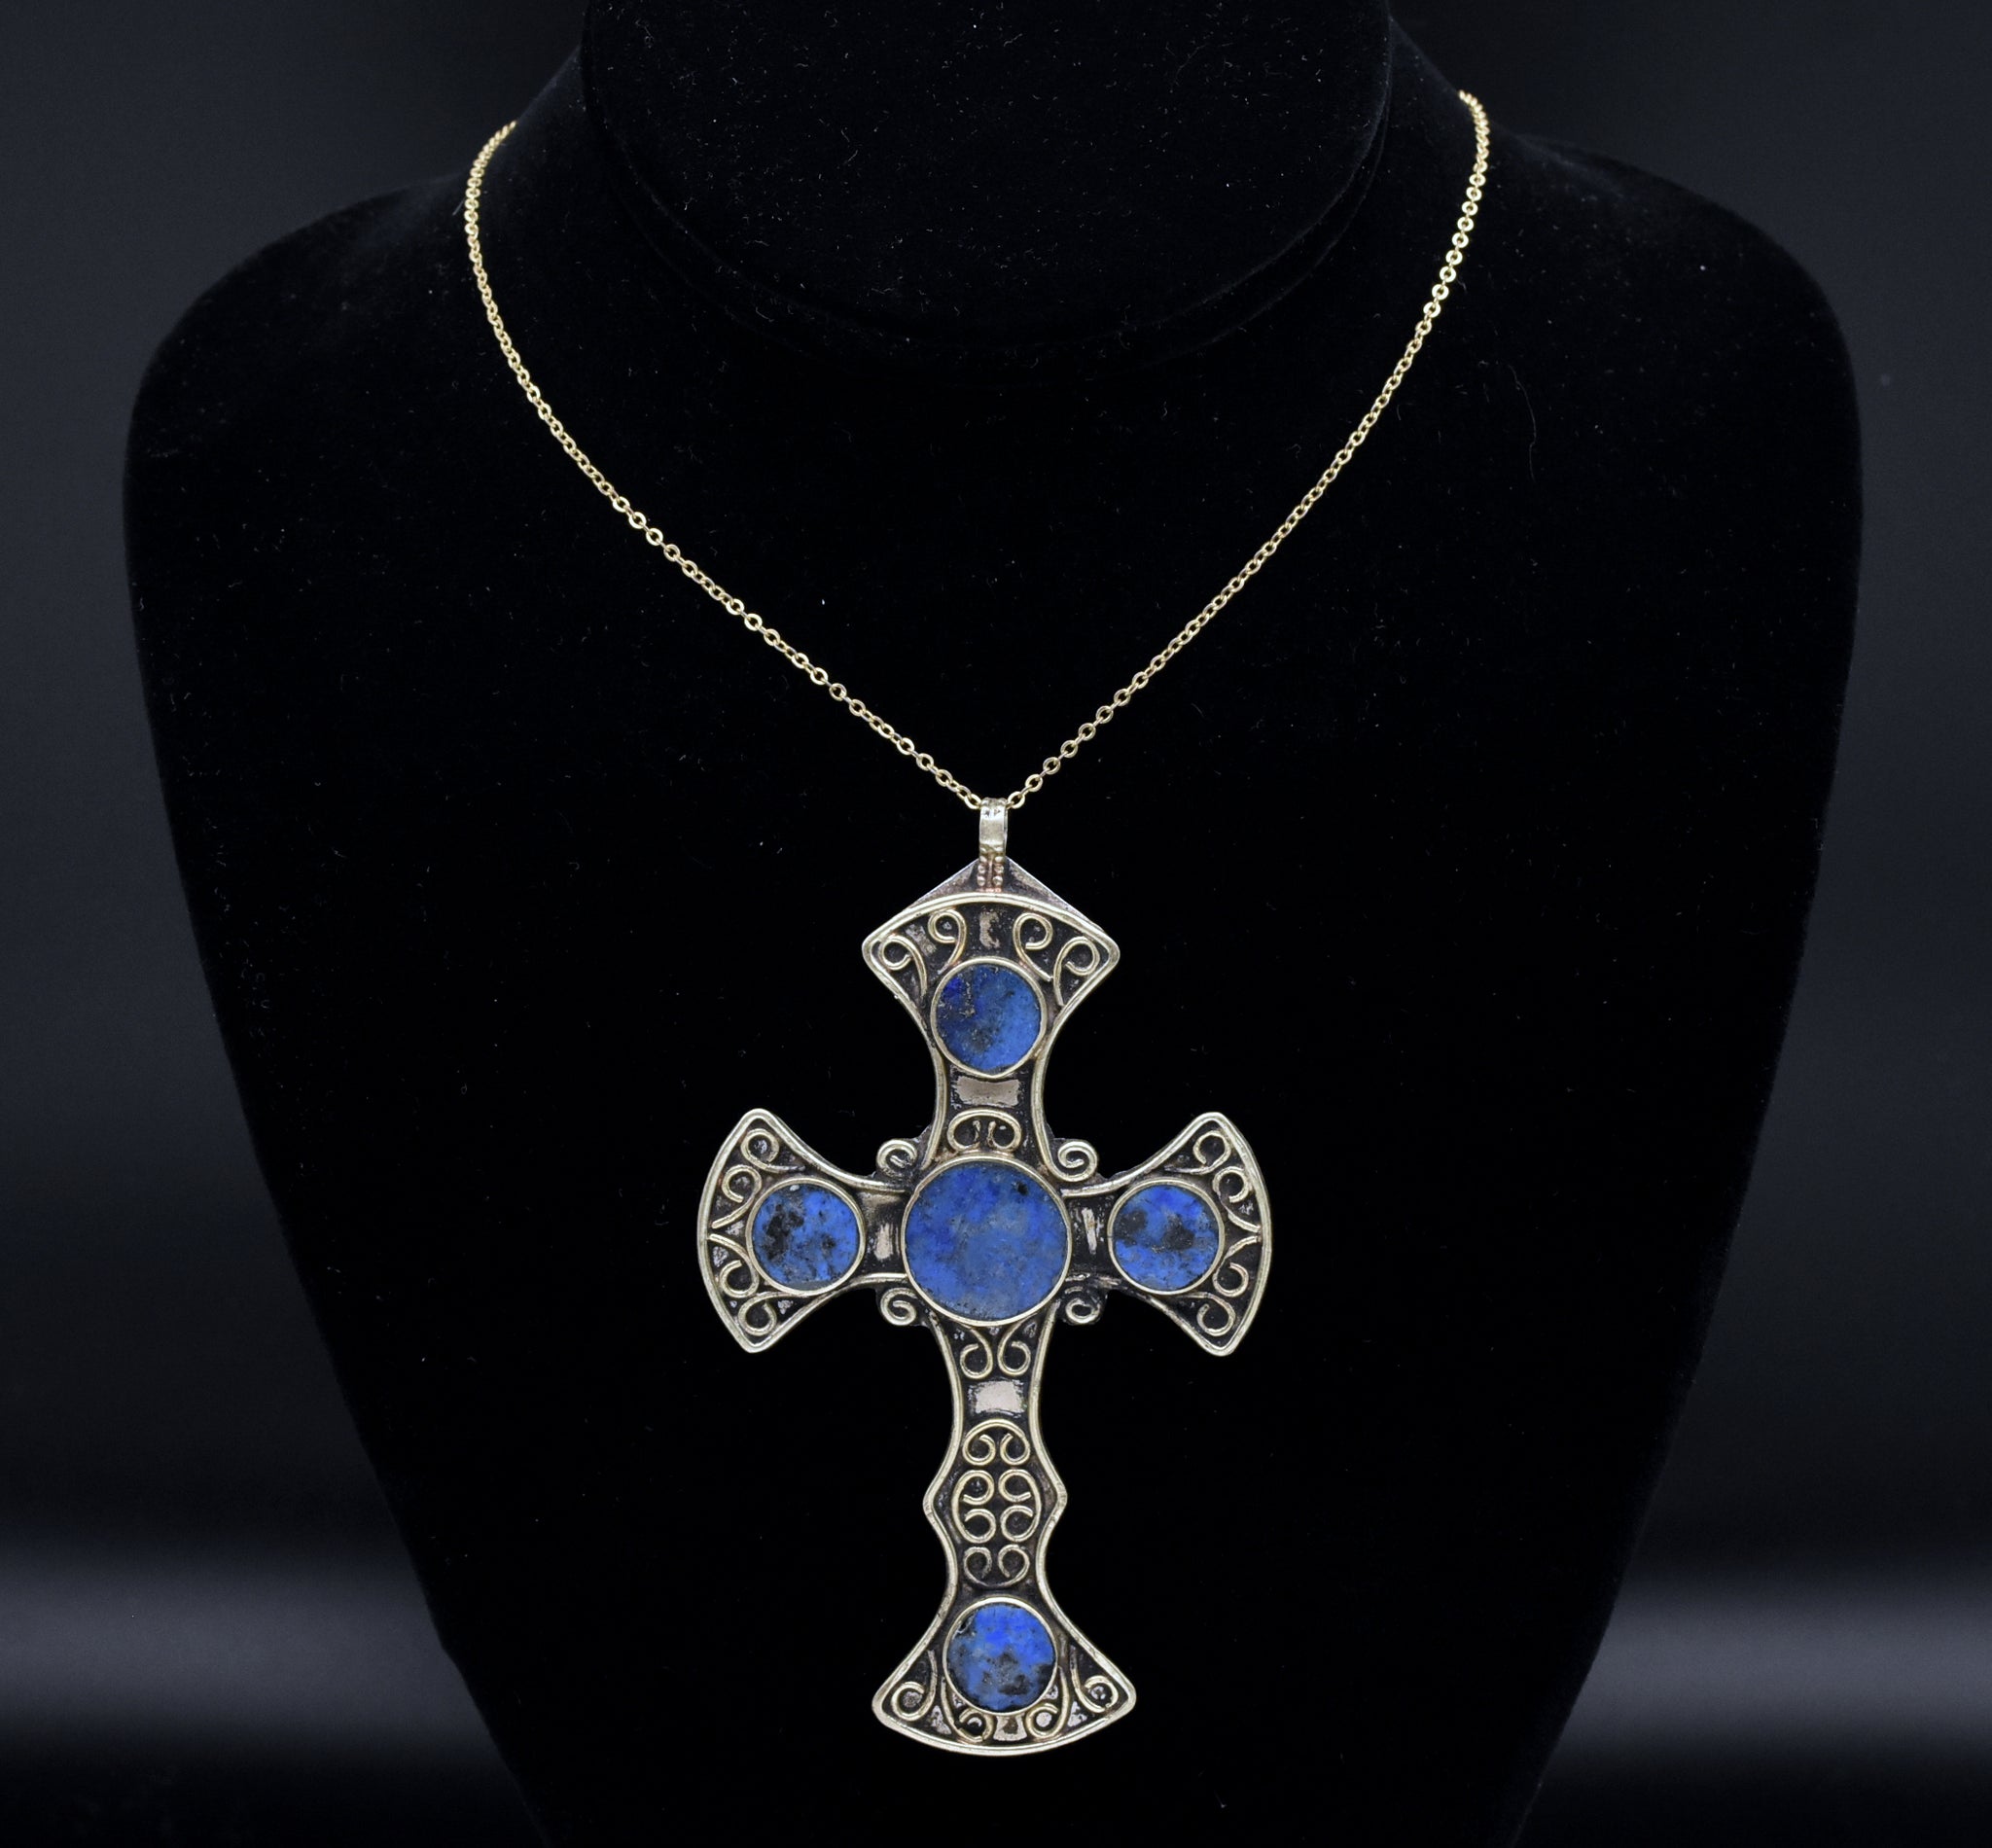 Vintage Lapis Lazuli Silver Tone Metal Cross Pendant Necklace - 17.75"